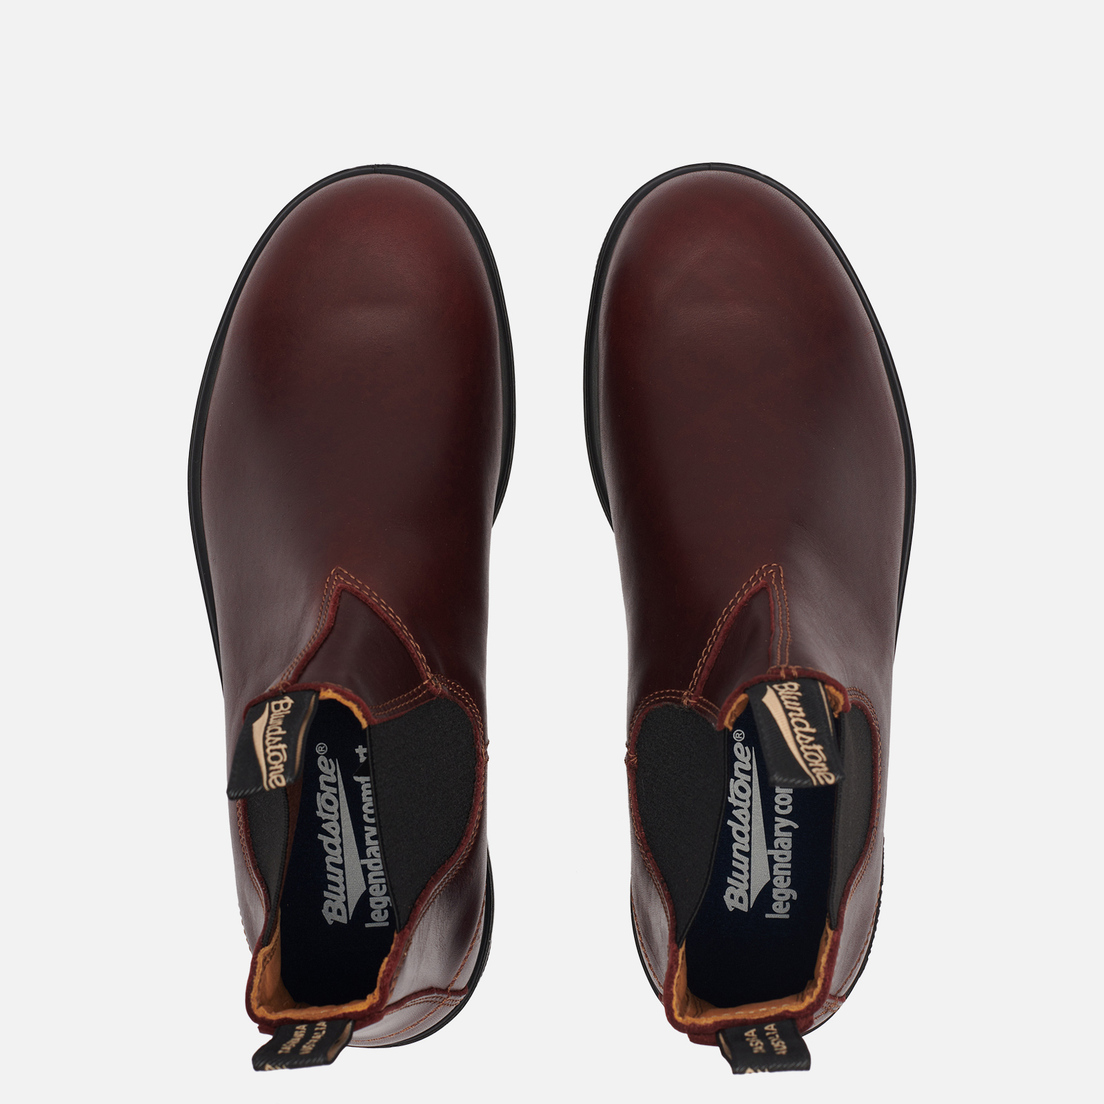 Blundstone Мужские ботинки 1440 Leather Lined